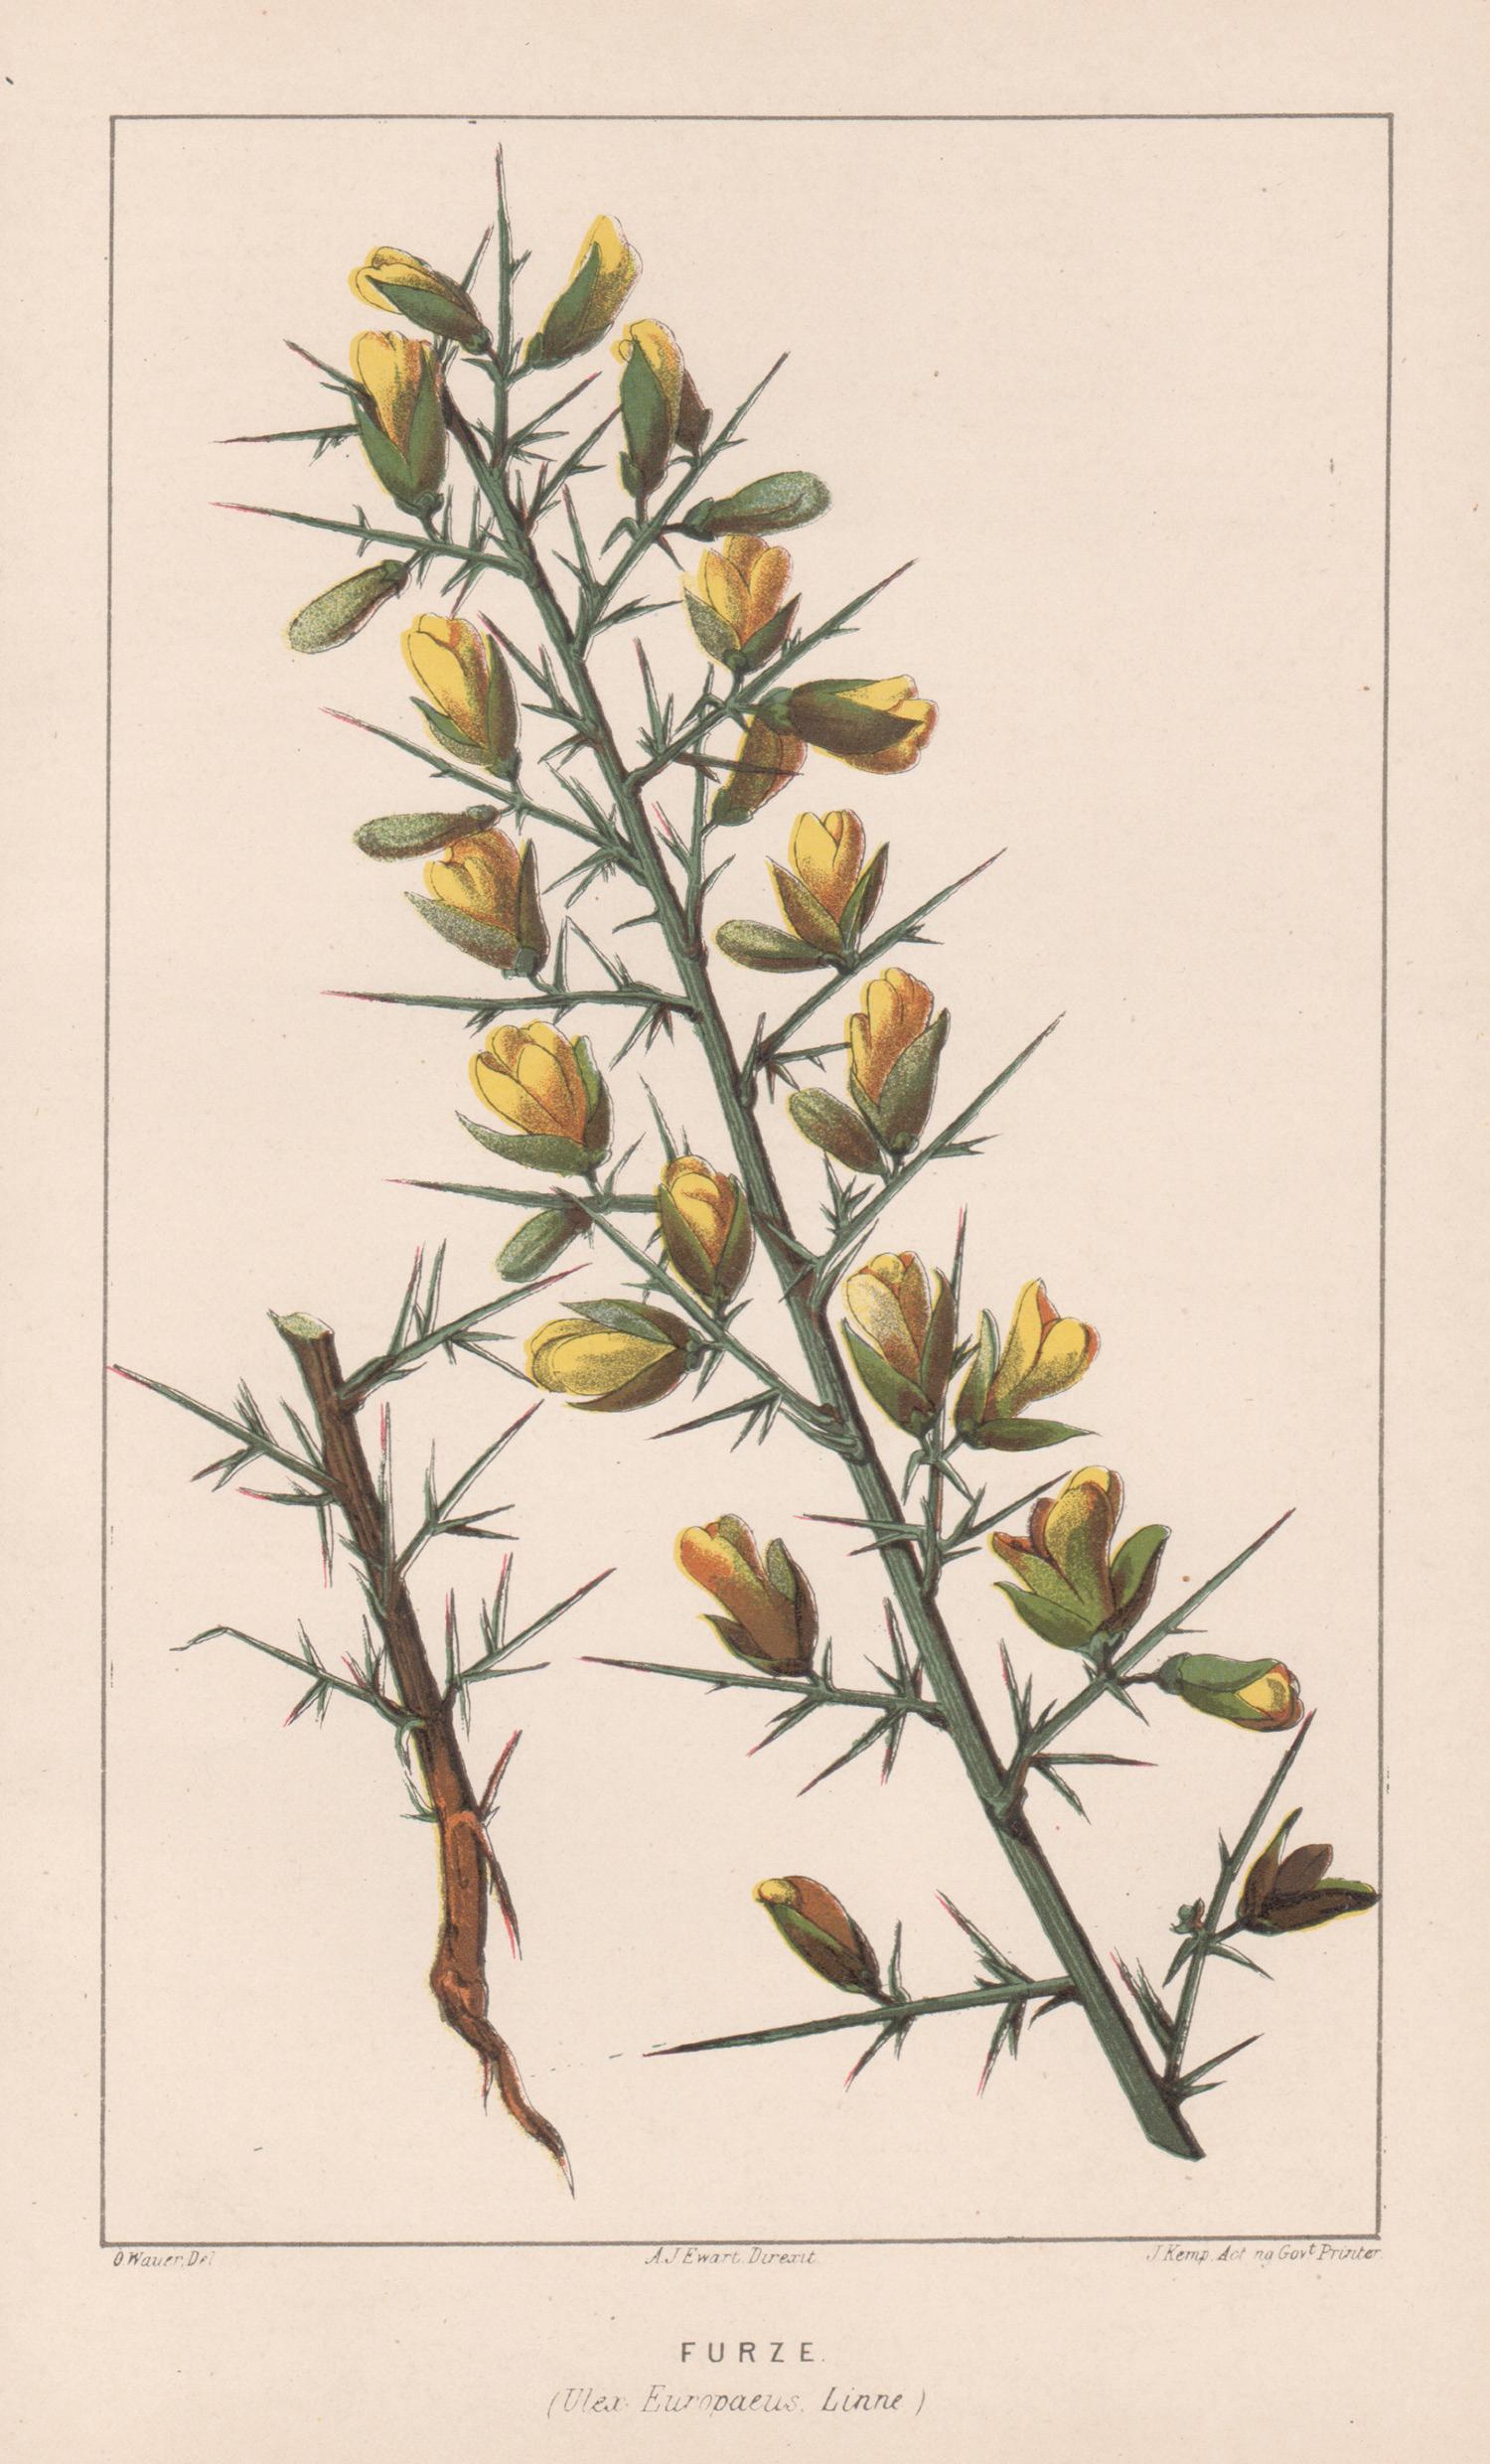 Furze (Ulex Europaeus), antique botanical lithograph